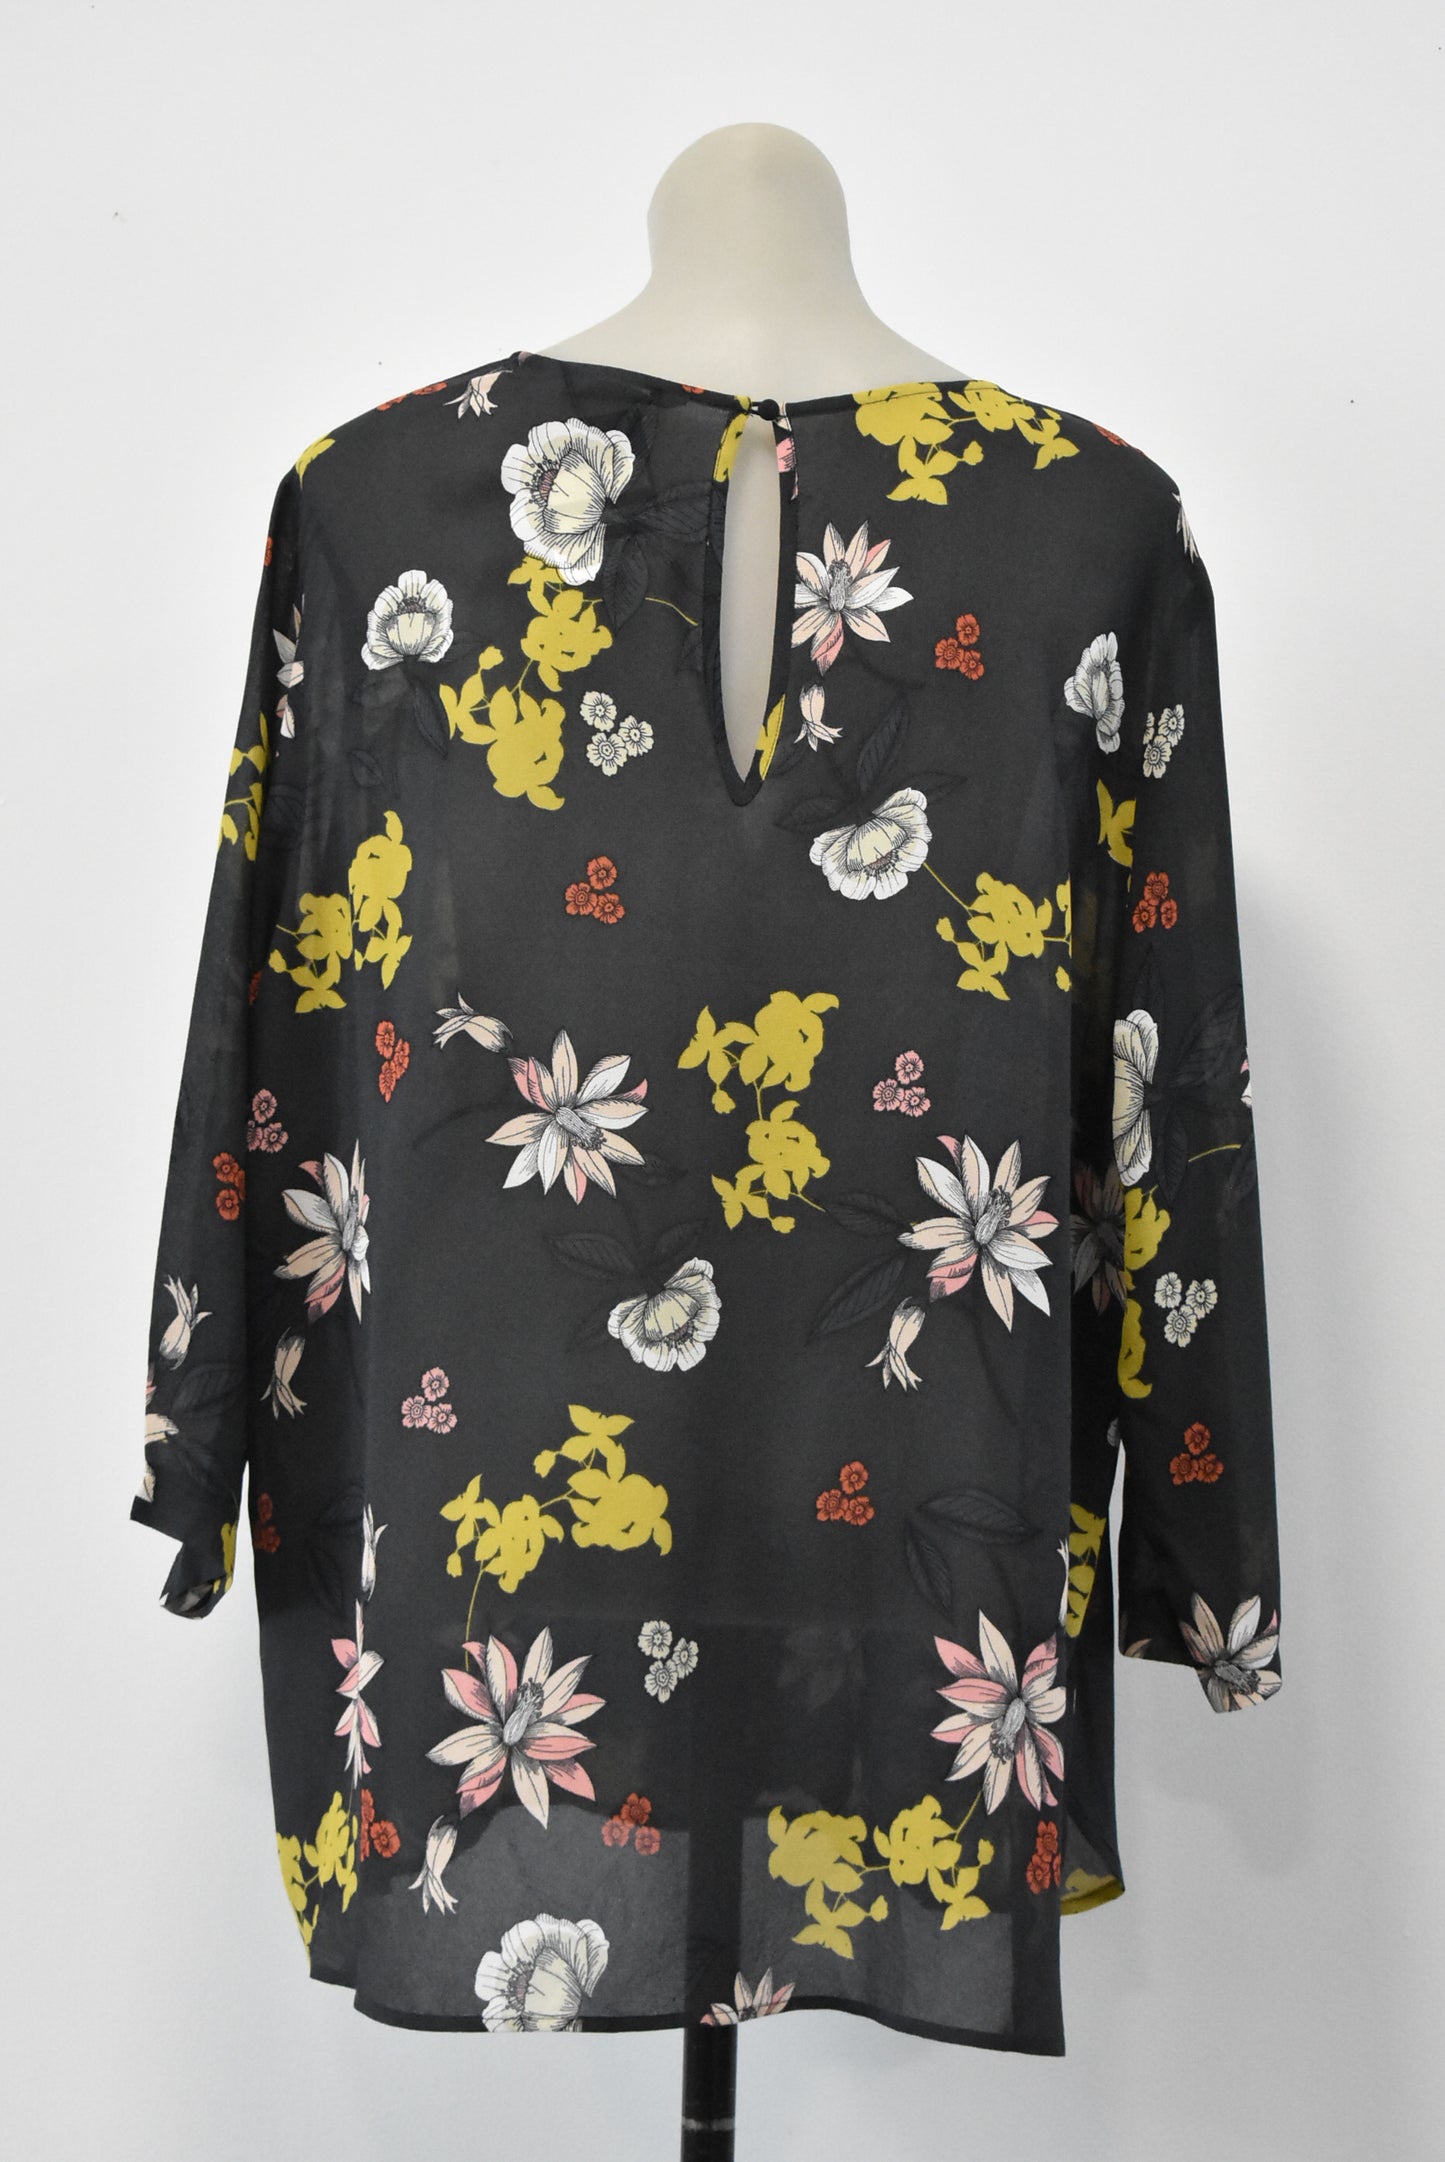 Max Floral blouse, Size 18